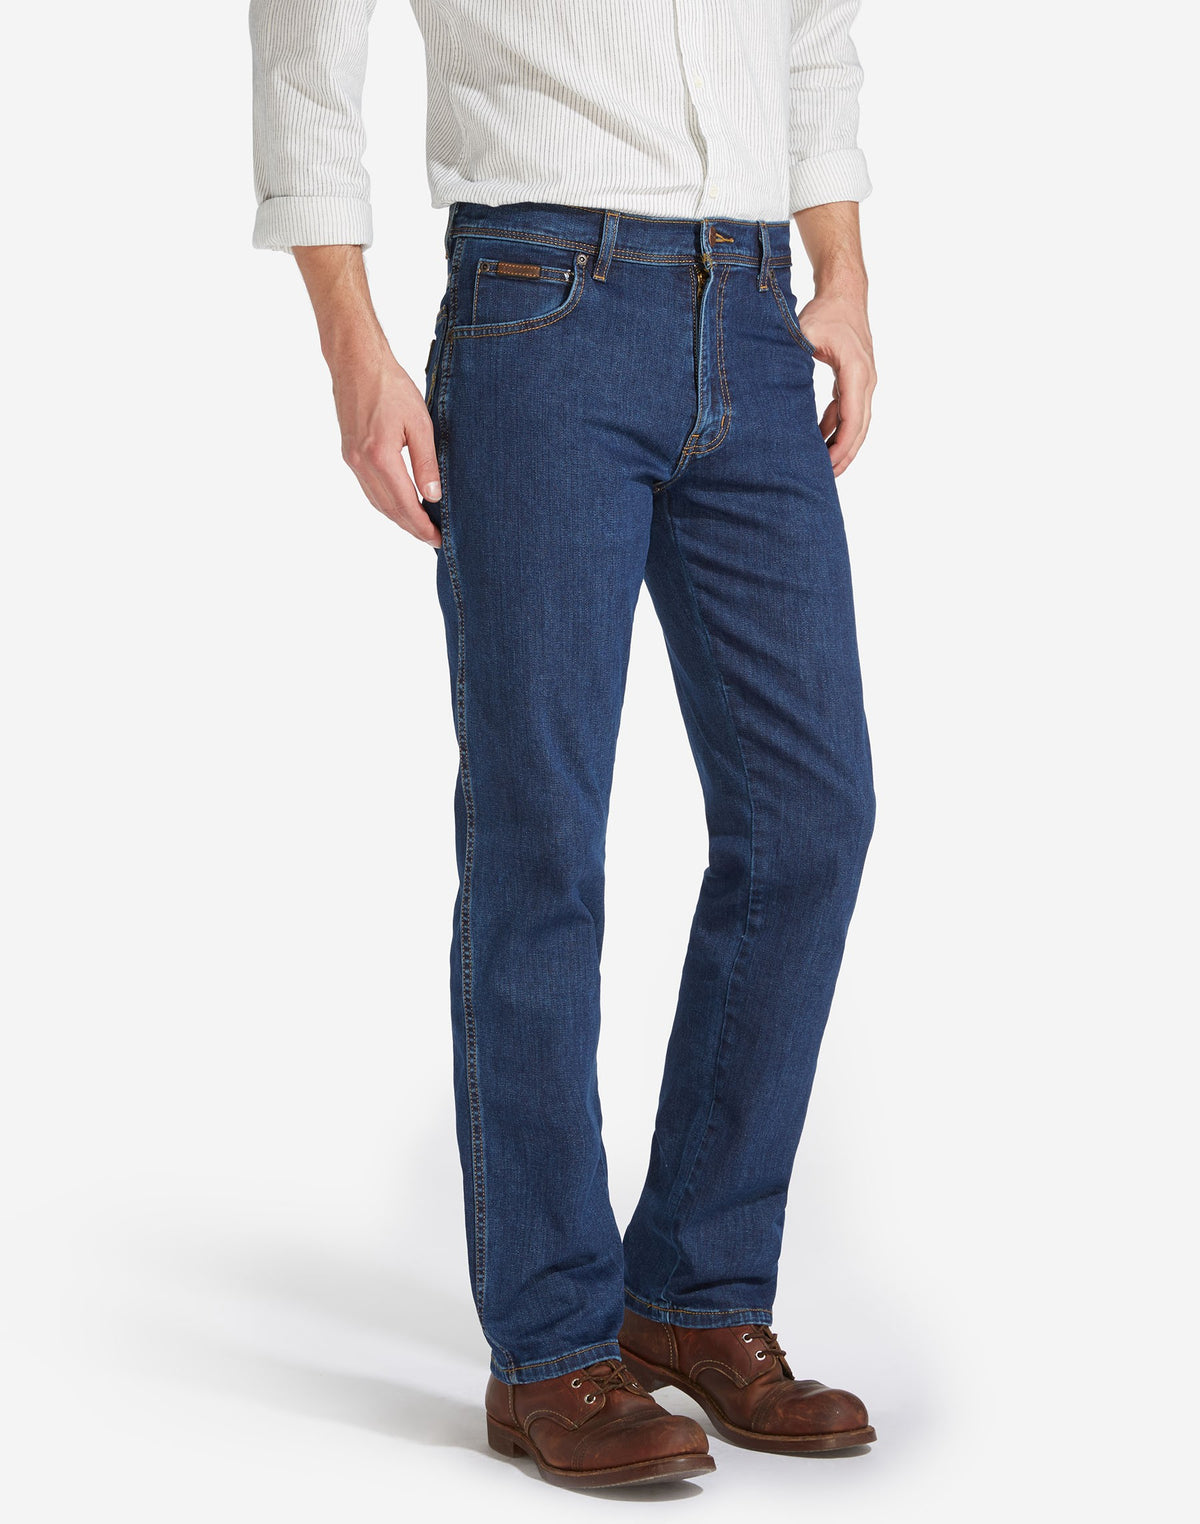 Mens Wrangler 'Texas' Jeans - Denim Stretch - Original Straight Fit, 01, W121-Core, Darkstone